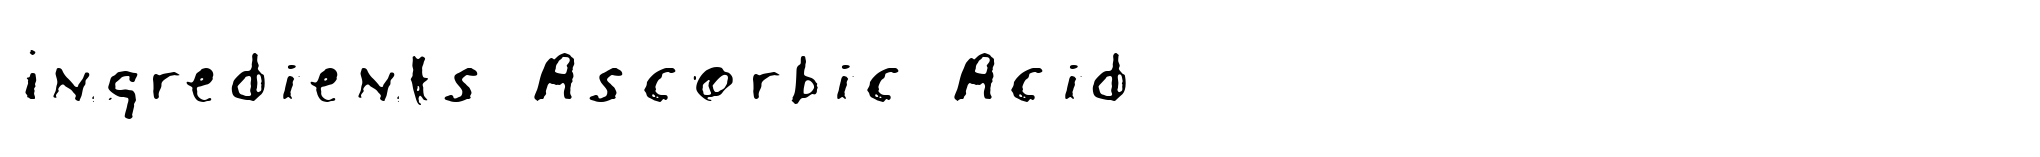 Ingredients Ascorbic Acid image